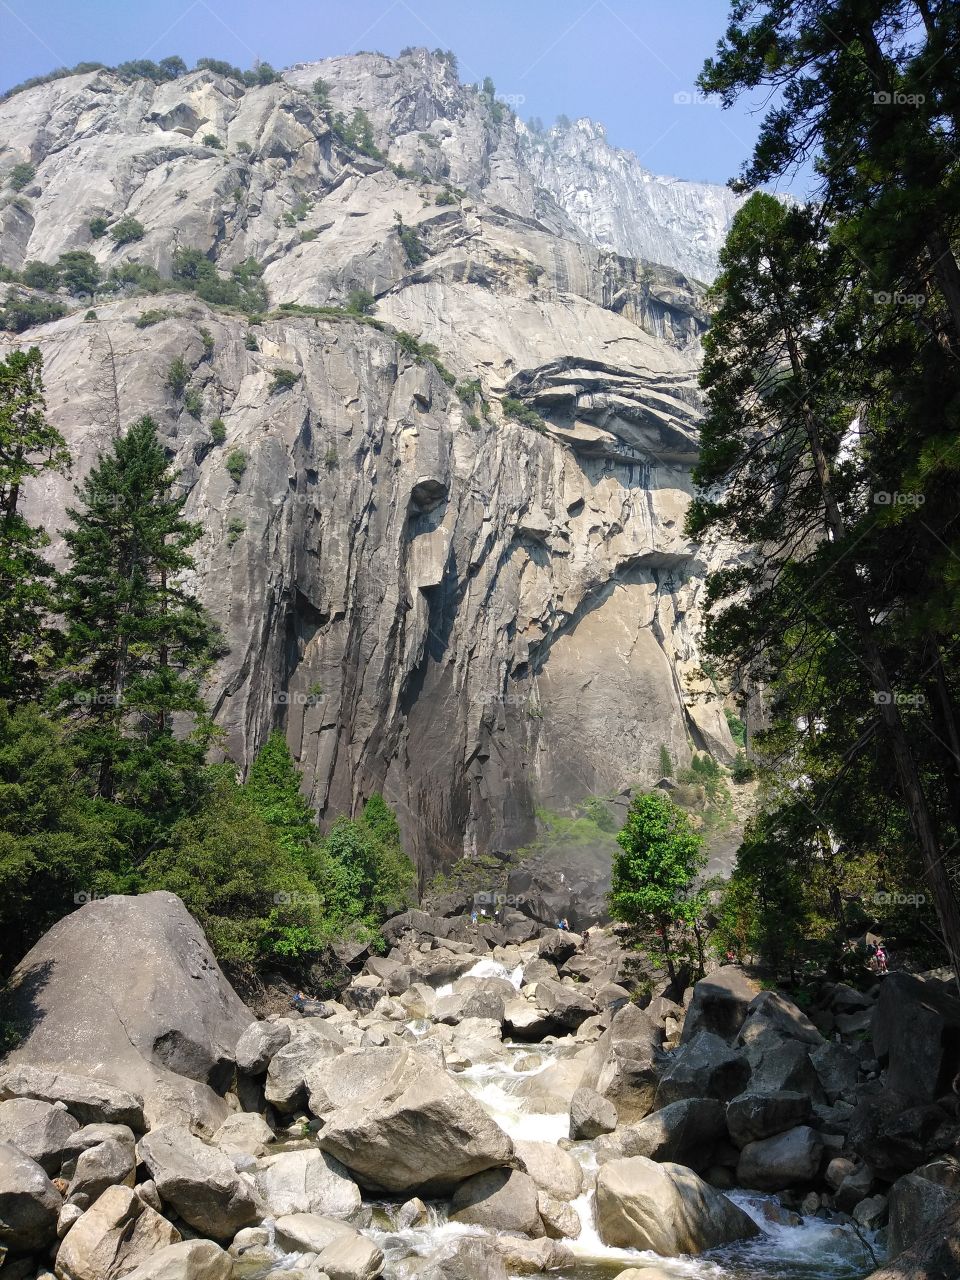 Yosemite is scenic!